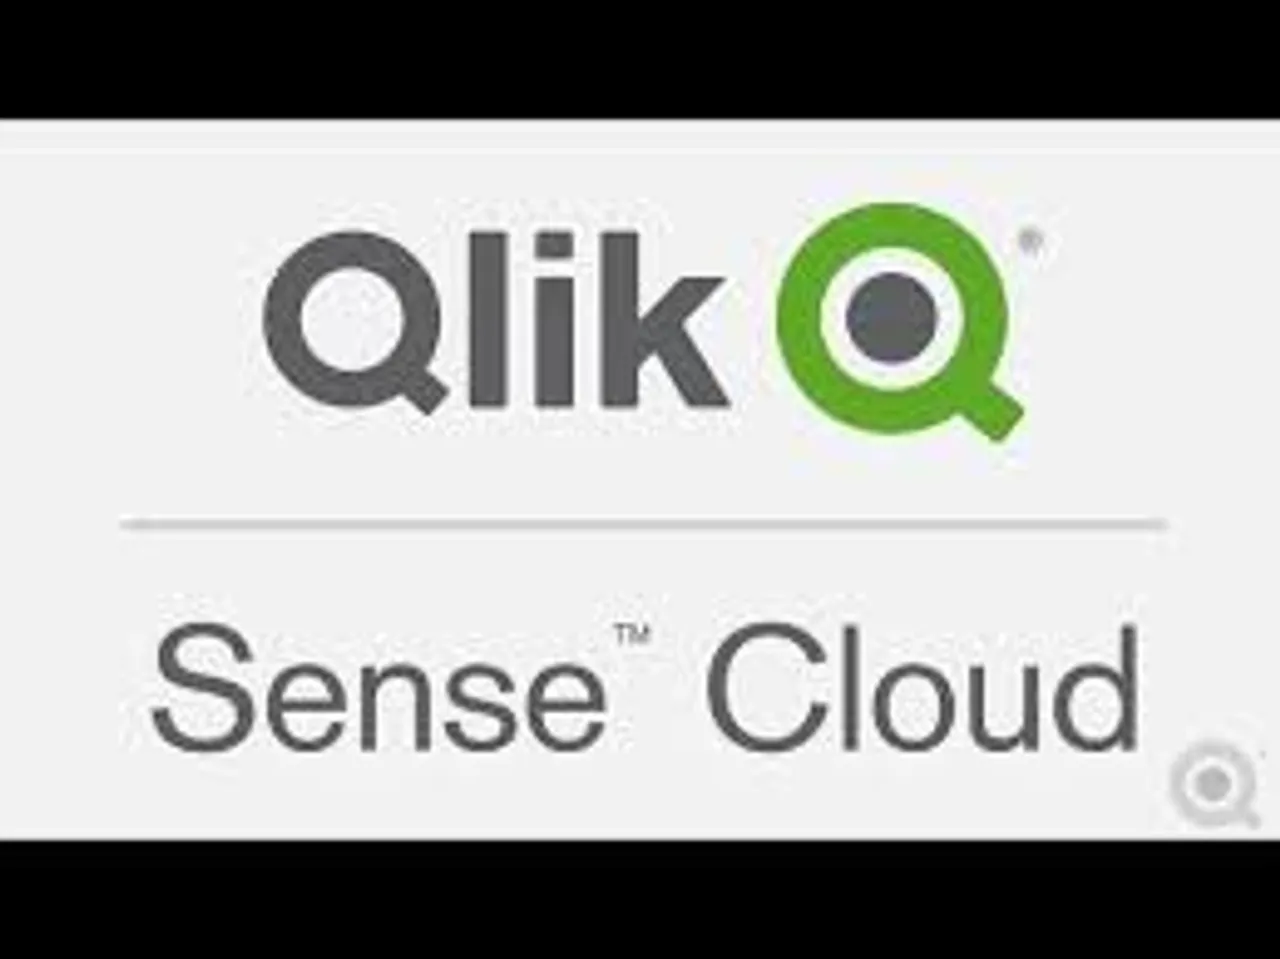 Qlik announces Qlik sense cloud business SaaS offering